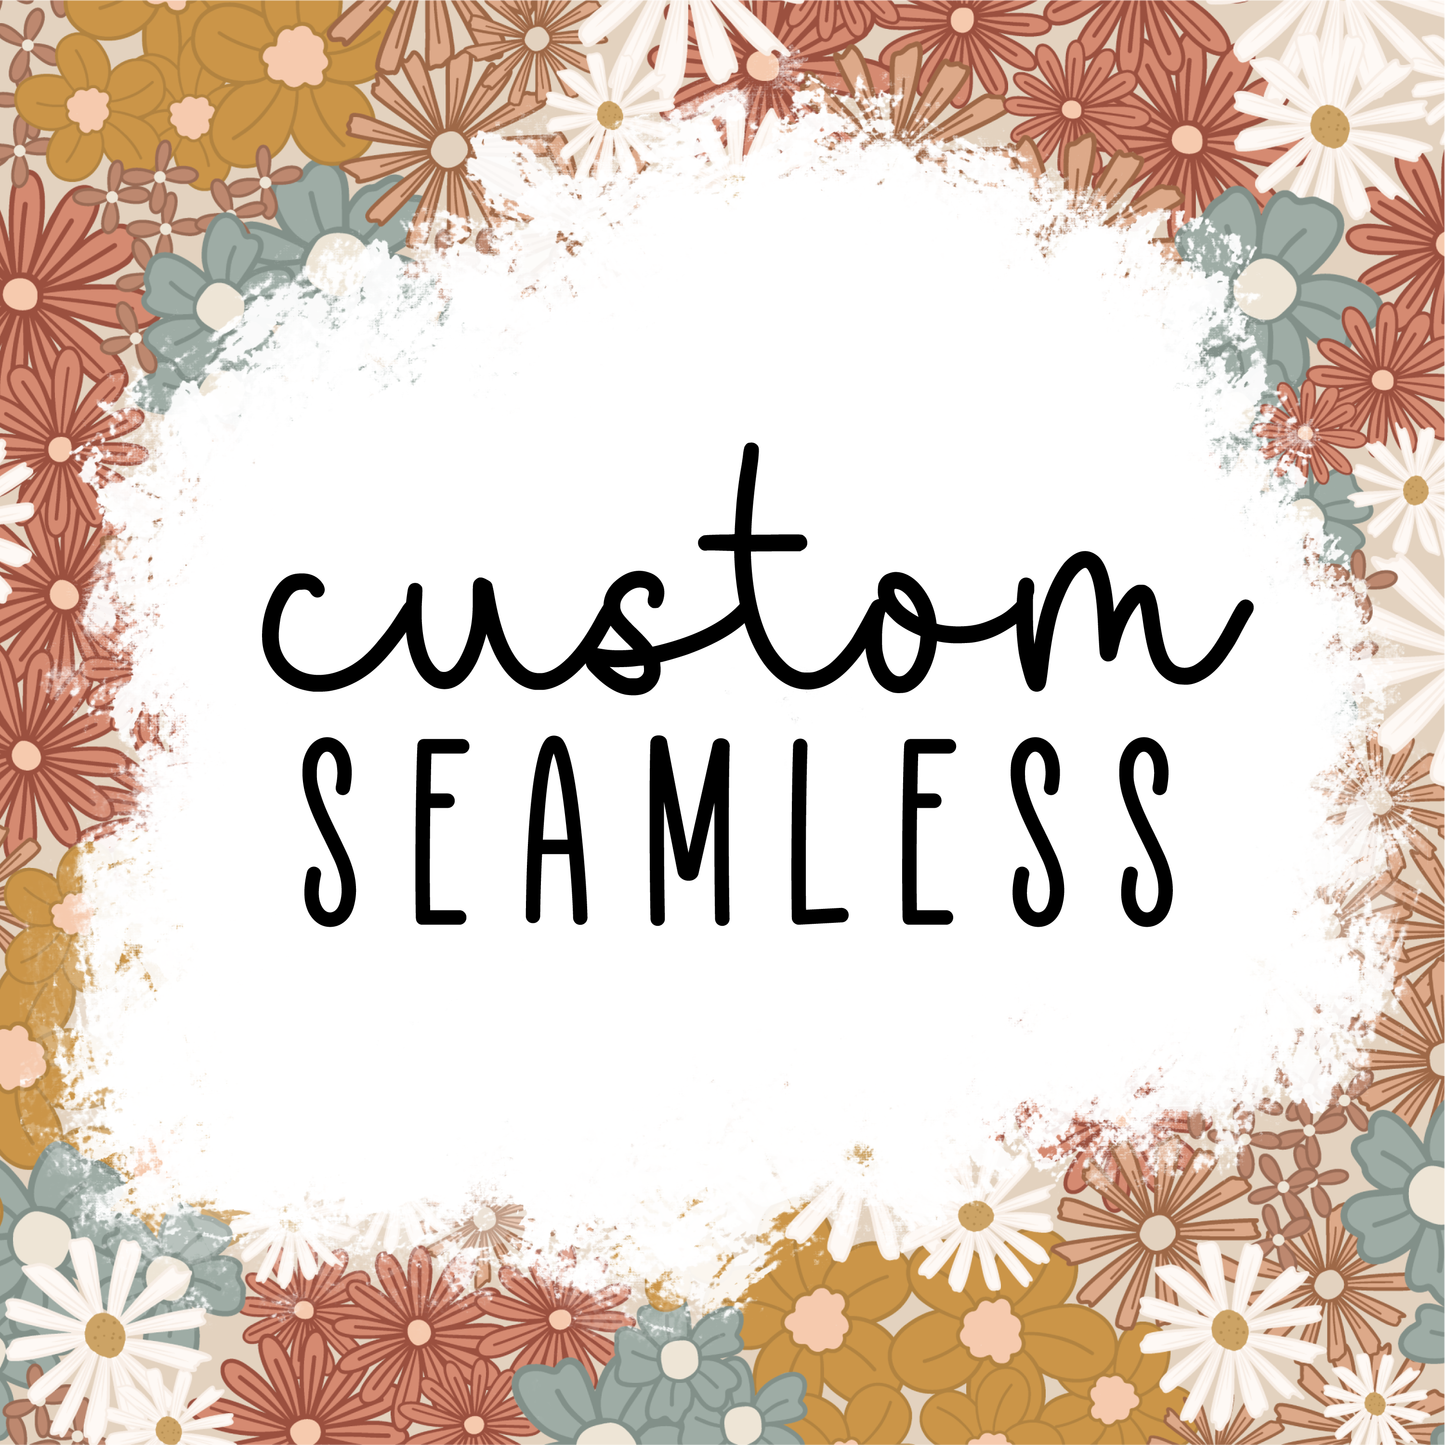 Custom Seamless Design